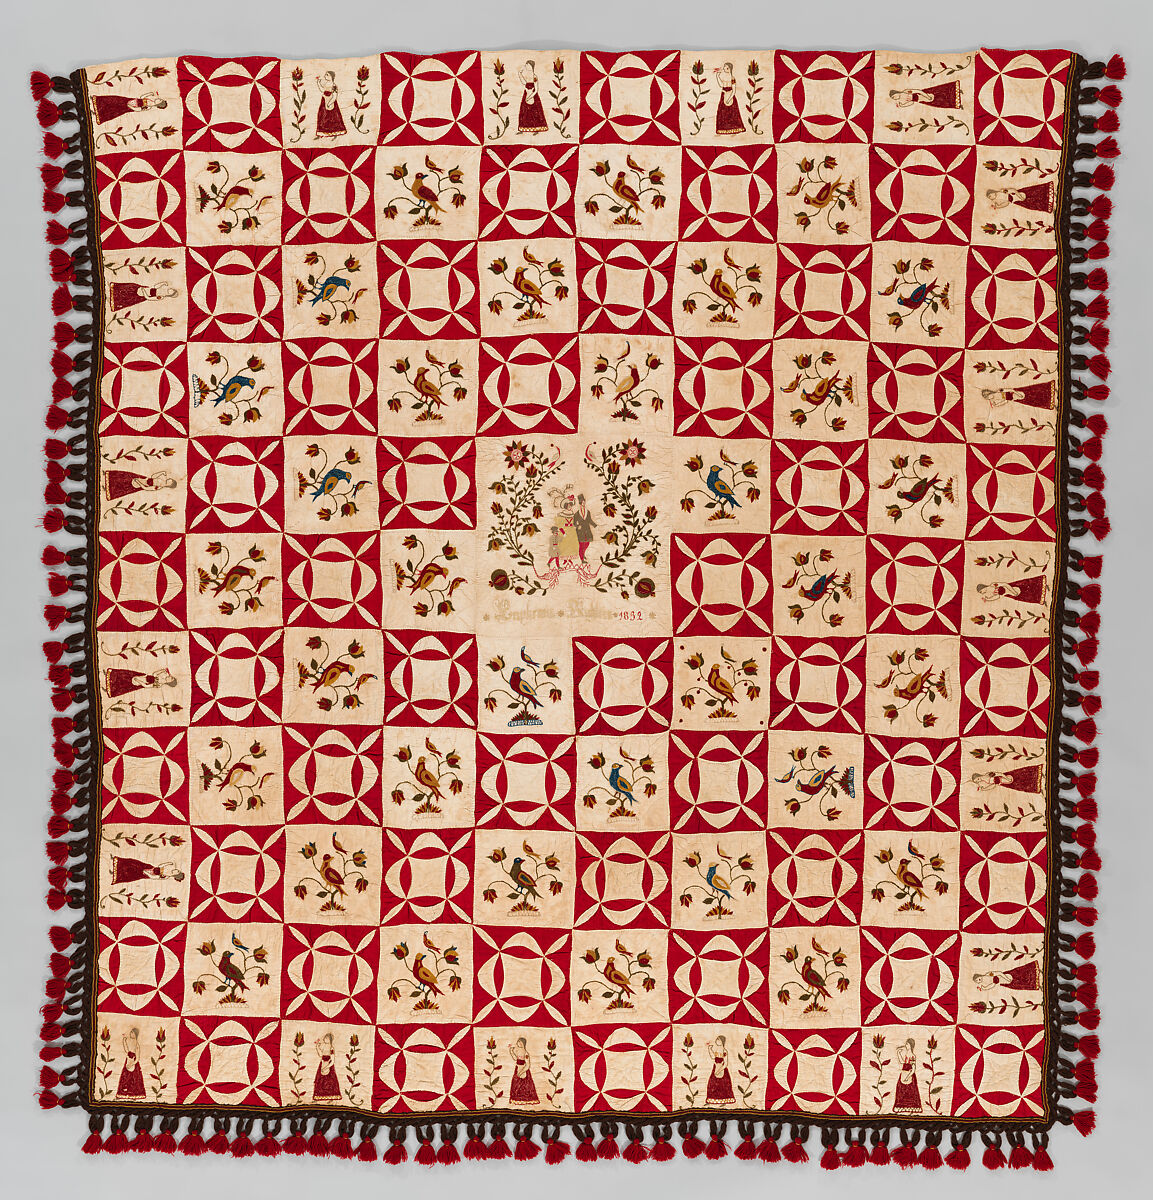 Pictorial Quilt, Euphemia Kichlein (American, Bucks County, Pennsylvania 1818–1885), Cotton, wool and silk, American 